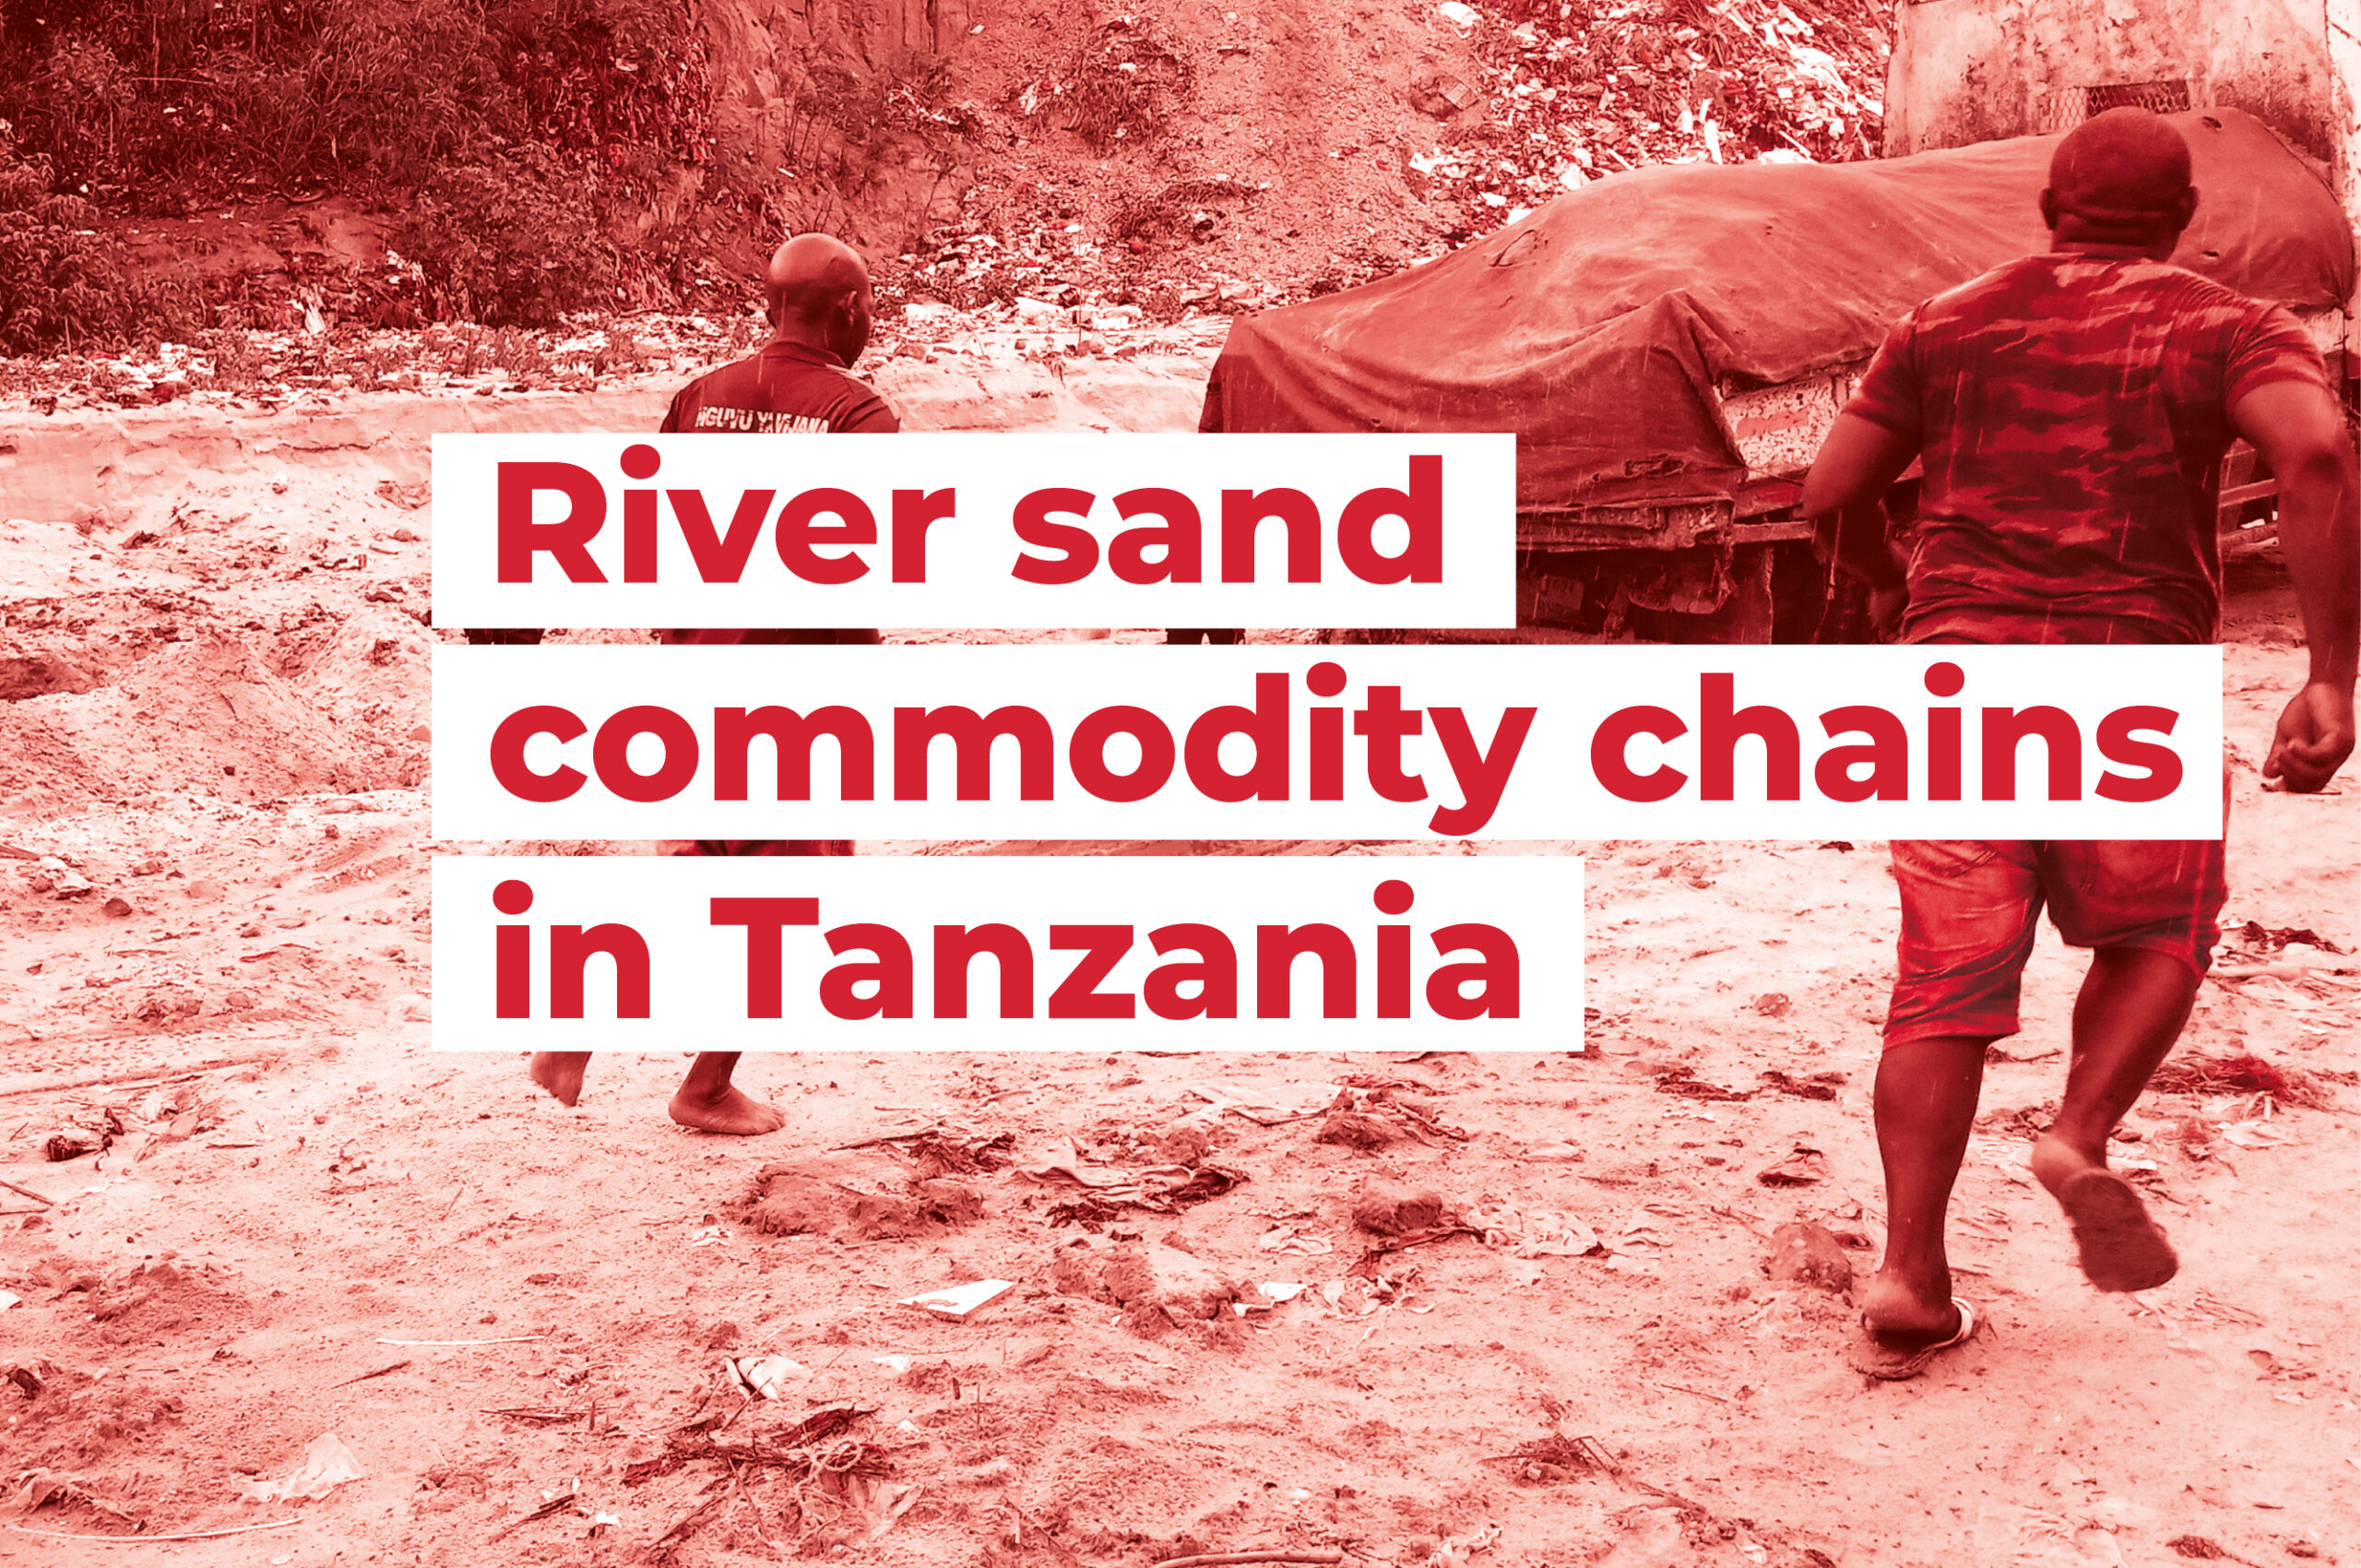 03_River_sand_commodity_chains_in_Tanzania_2